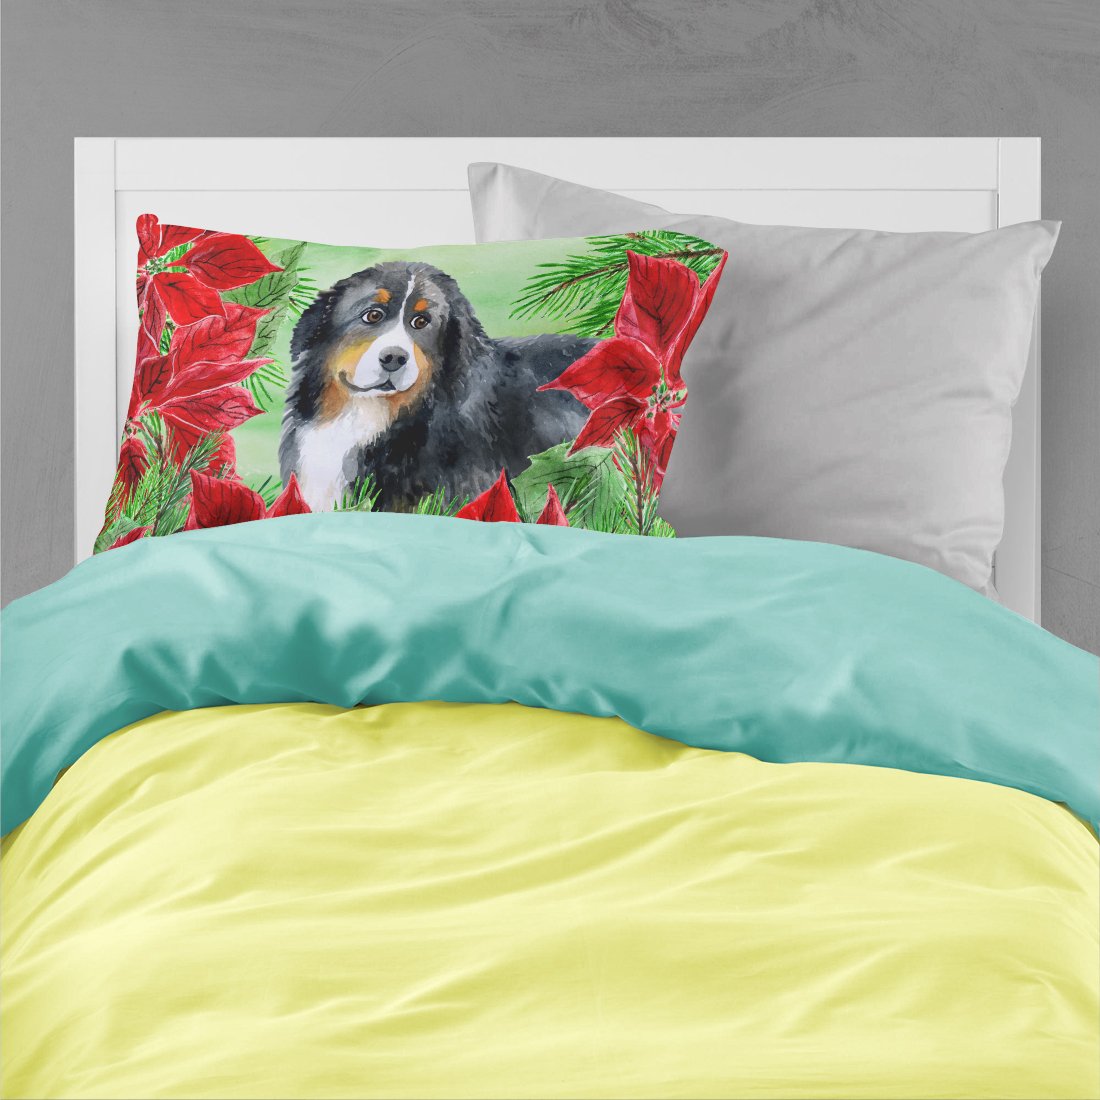 Bernese Mountain Dog Poinsettas Fabric Standard Pillowcase CK1294PILLOWCASE by Caroline's Treasures